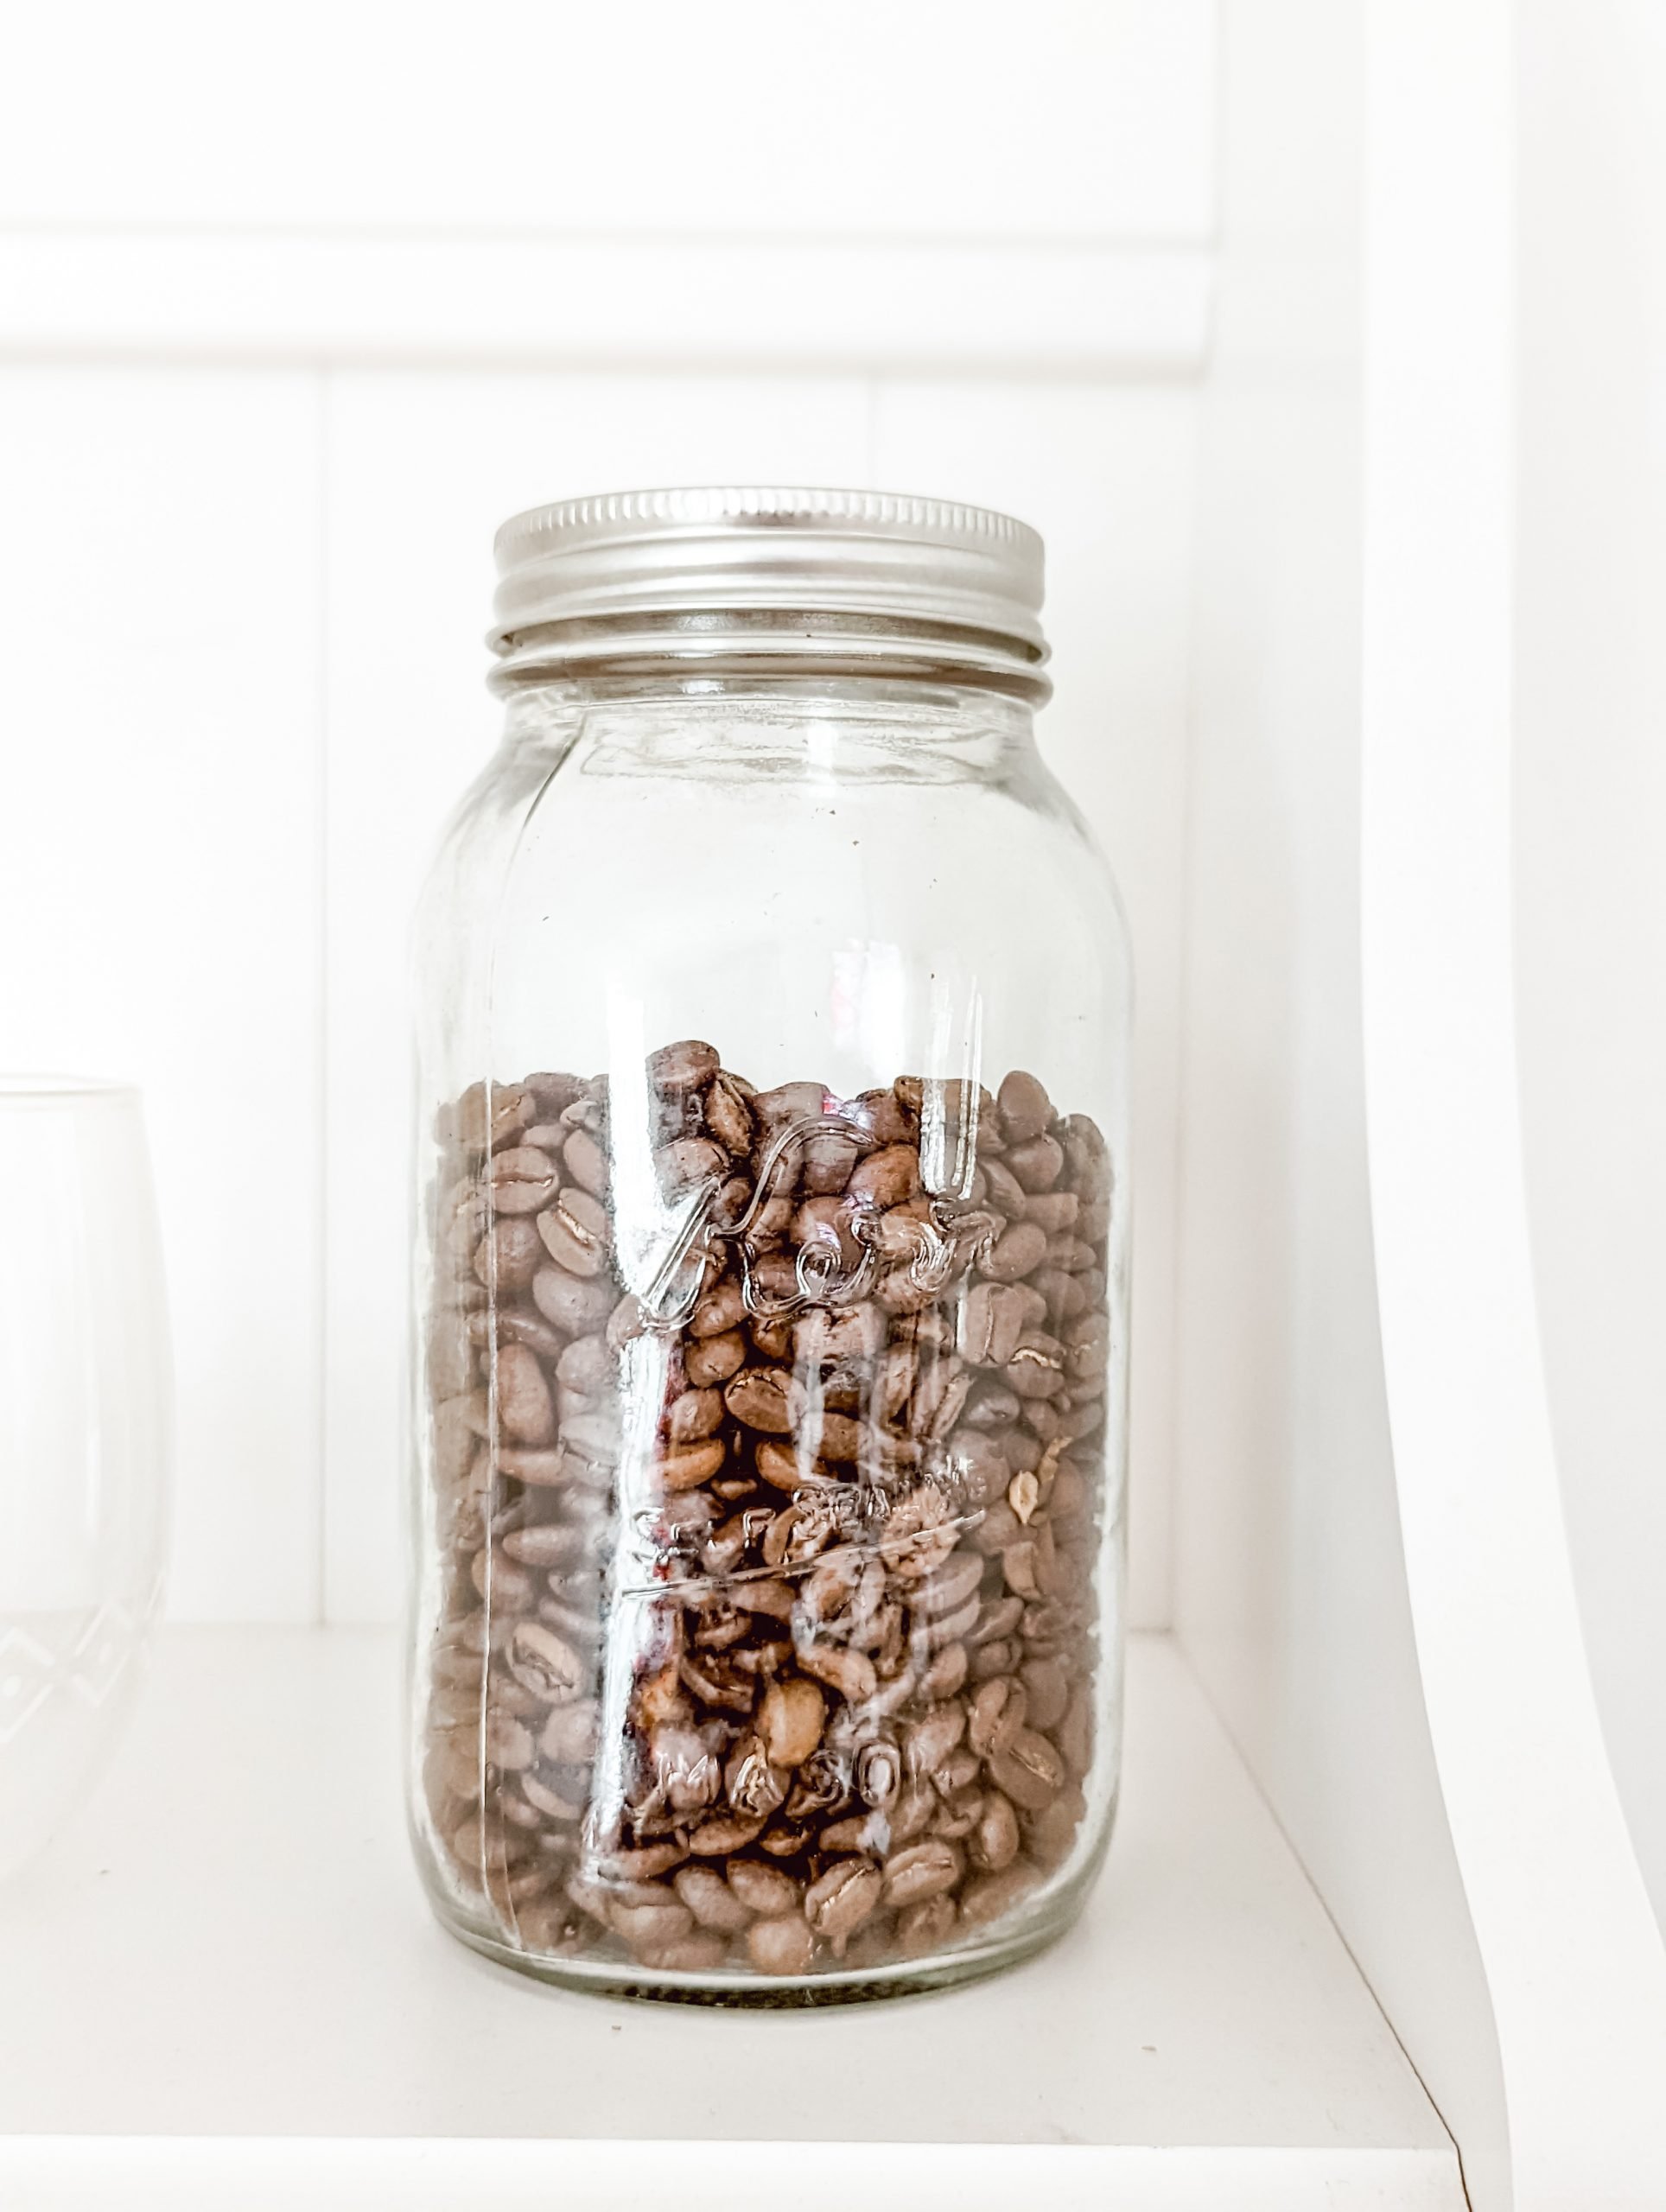 kerr mason jar with coffee beans